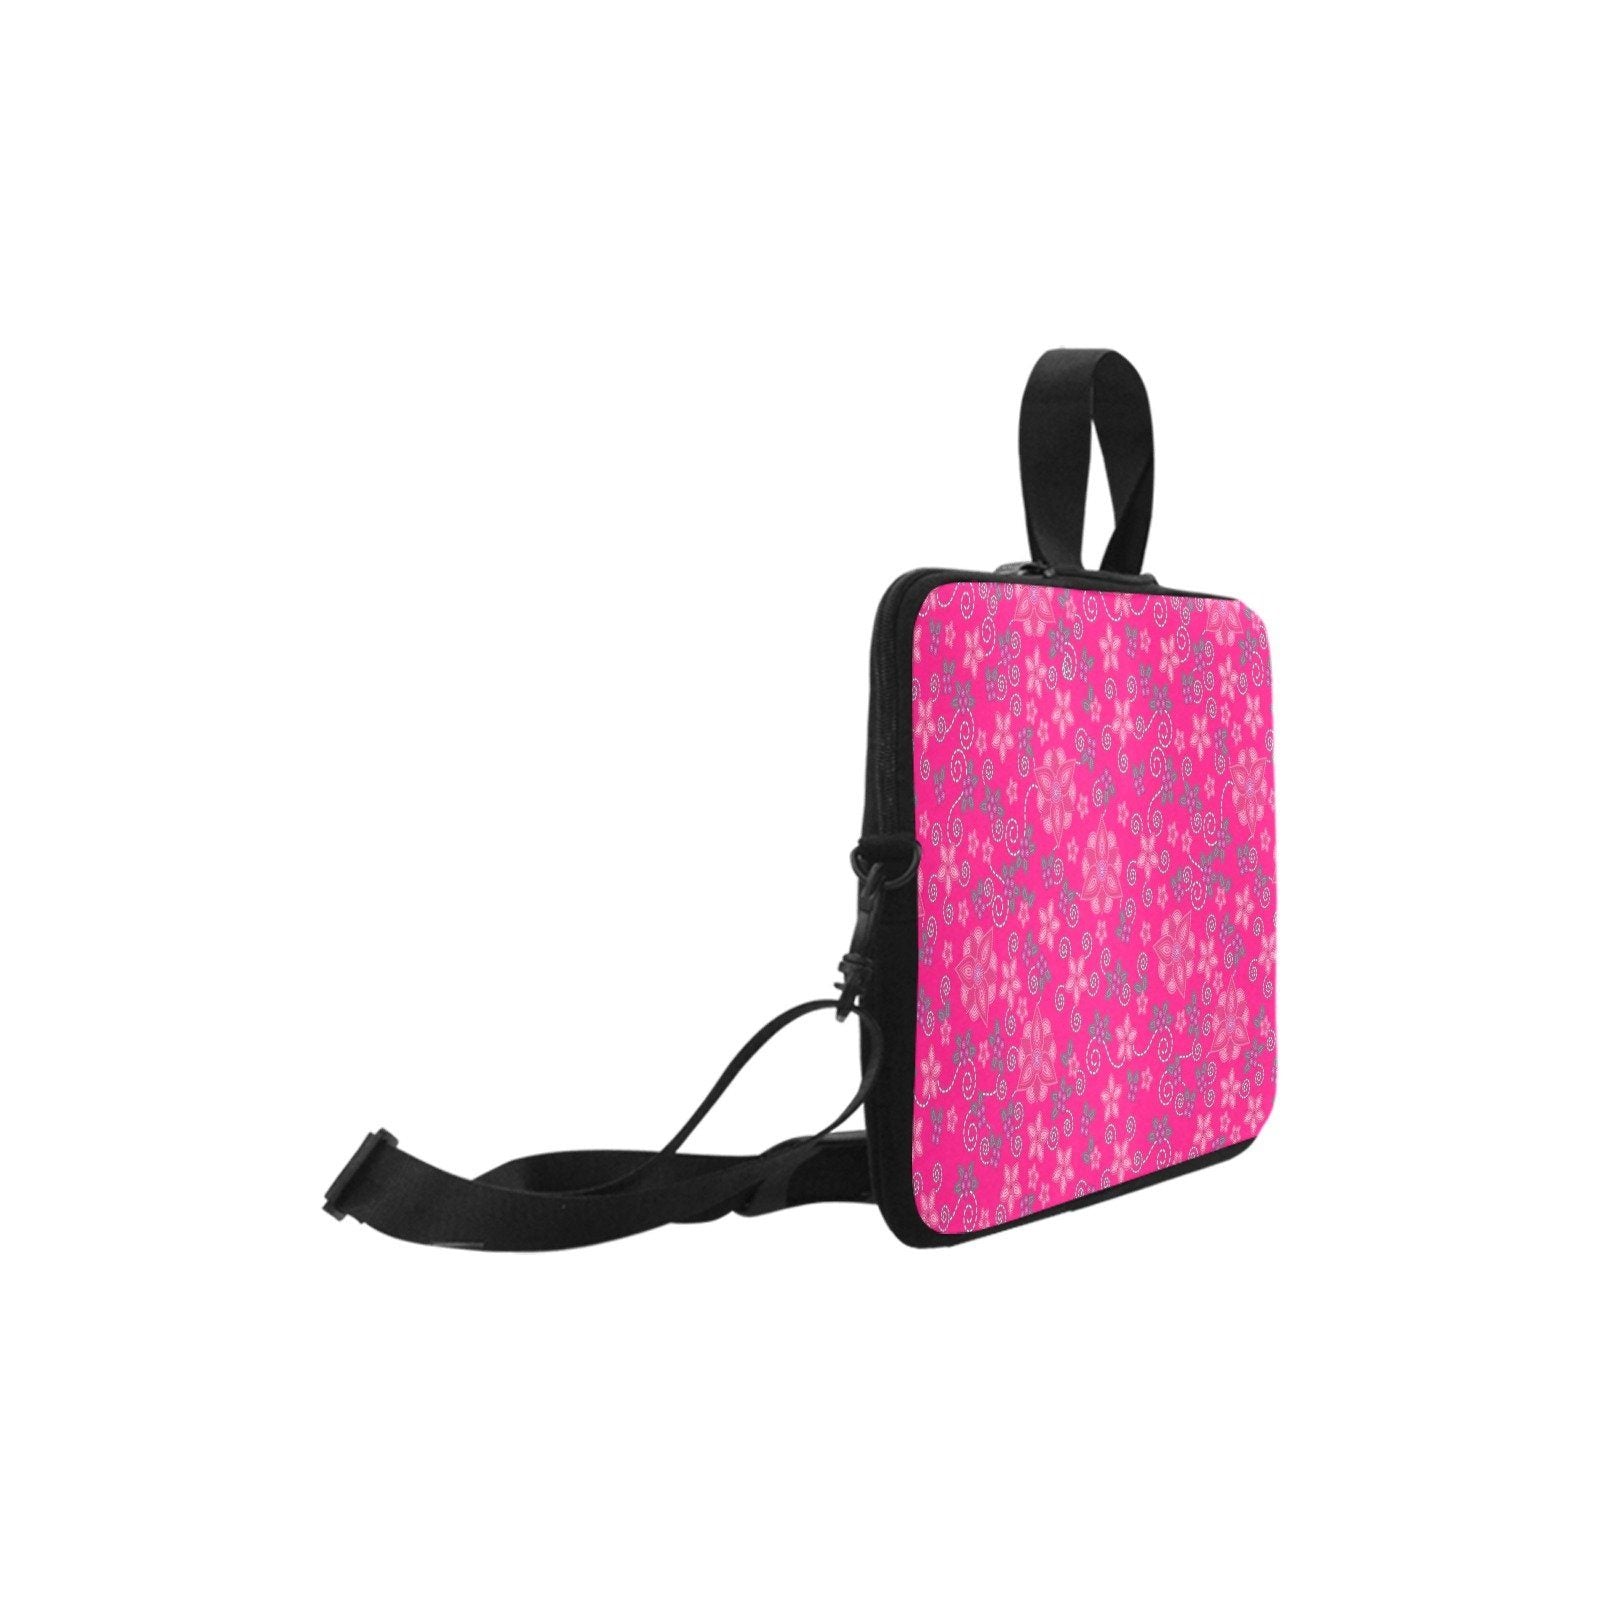 Berry Picking Pink Laptop Handbags 11" bag e-joyer 